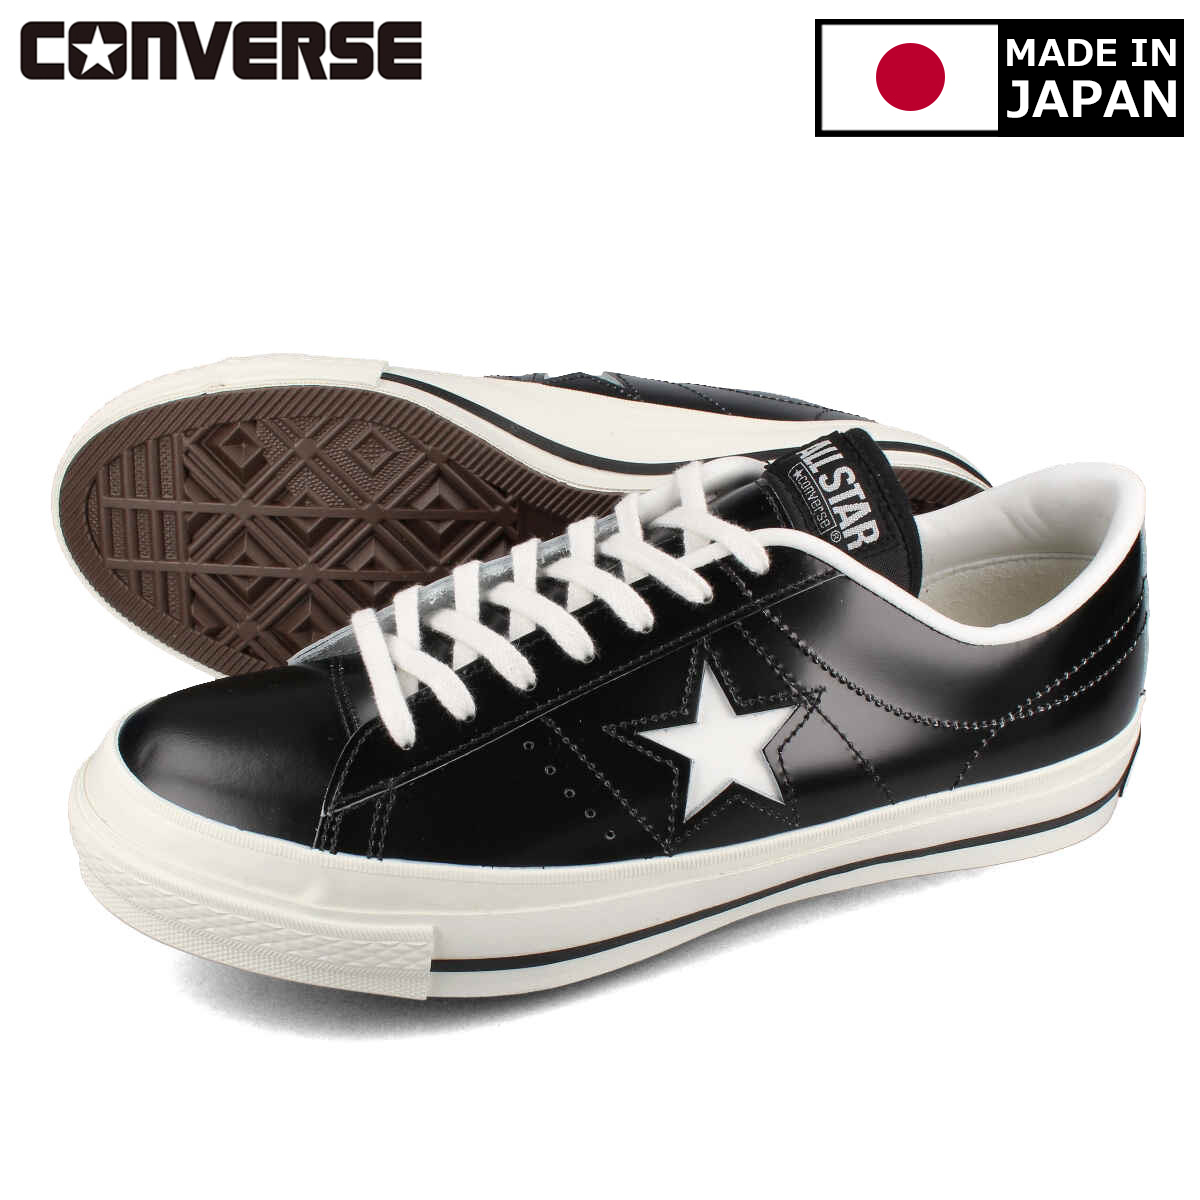 converse one star jp